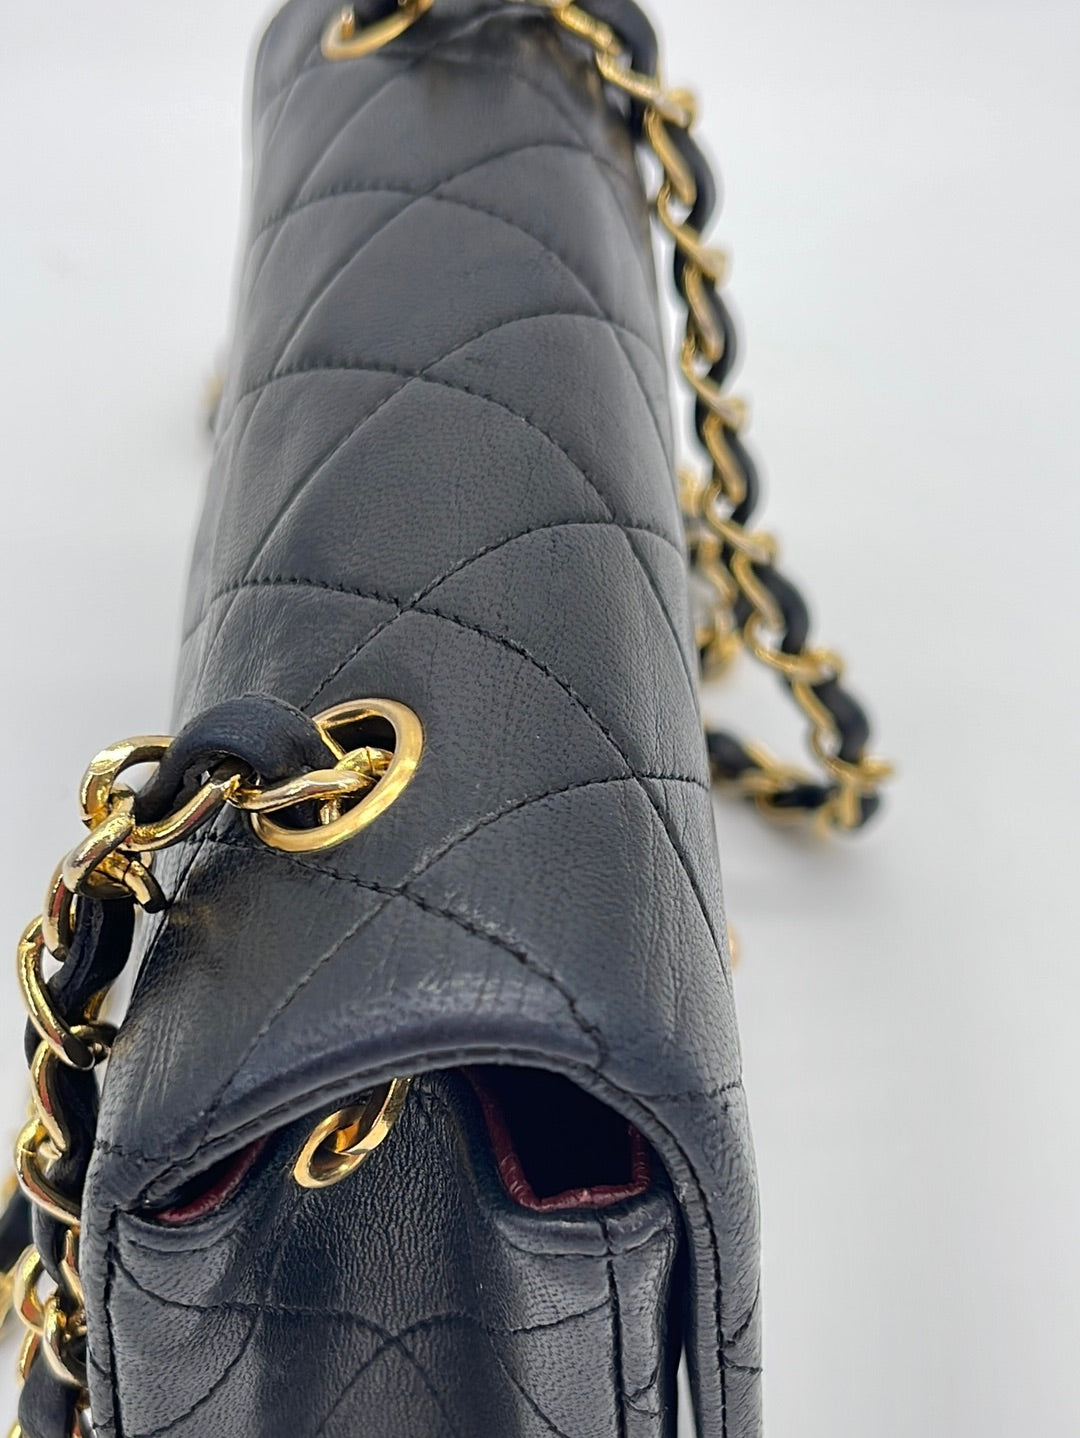 CHANEL, Bags, Chanel Lambskin Leather Cc Flap Shoulder Bag